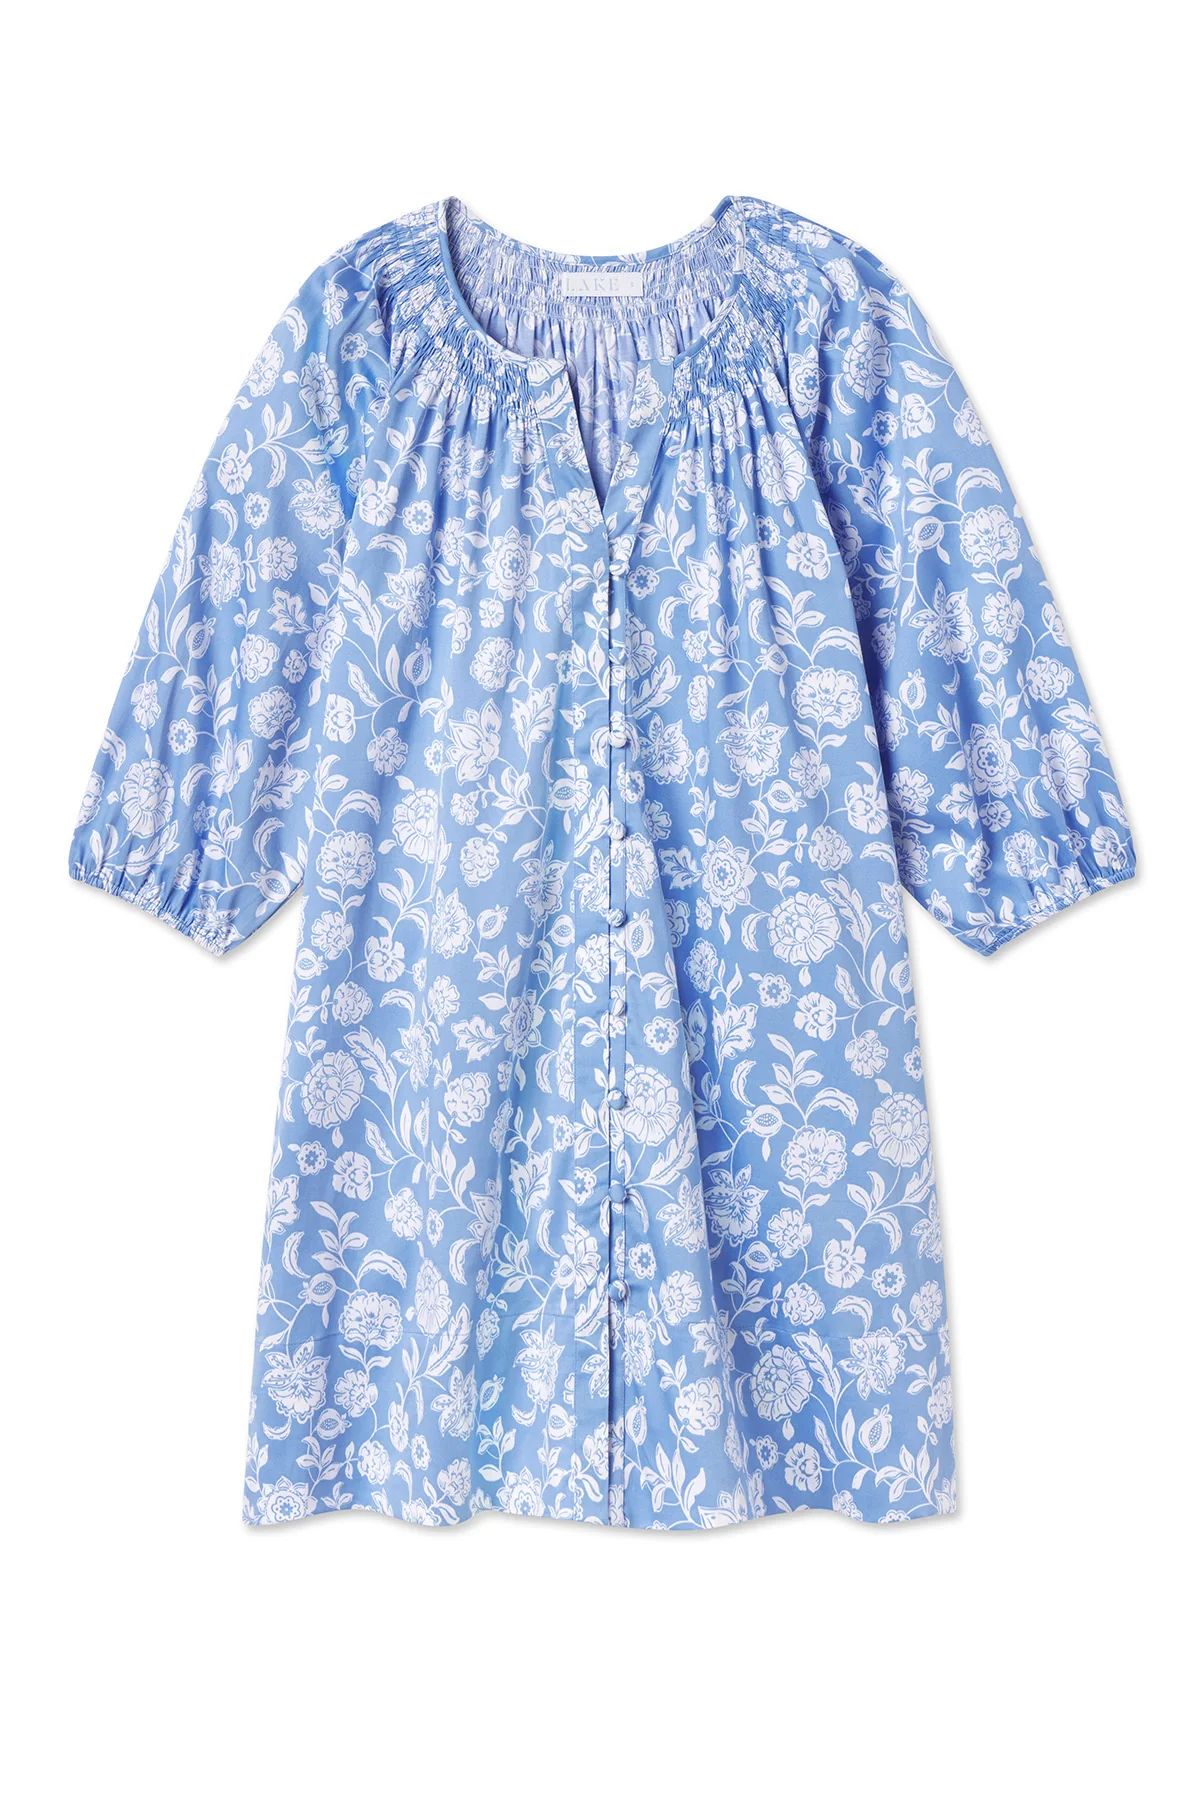 Hammock Shirt Dress in Baltic Bouquet | Lake Pajamas